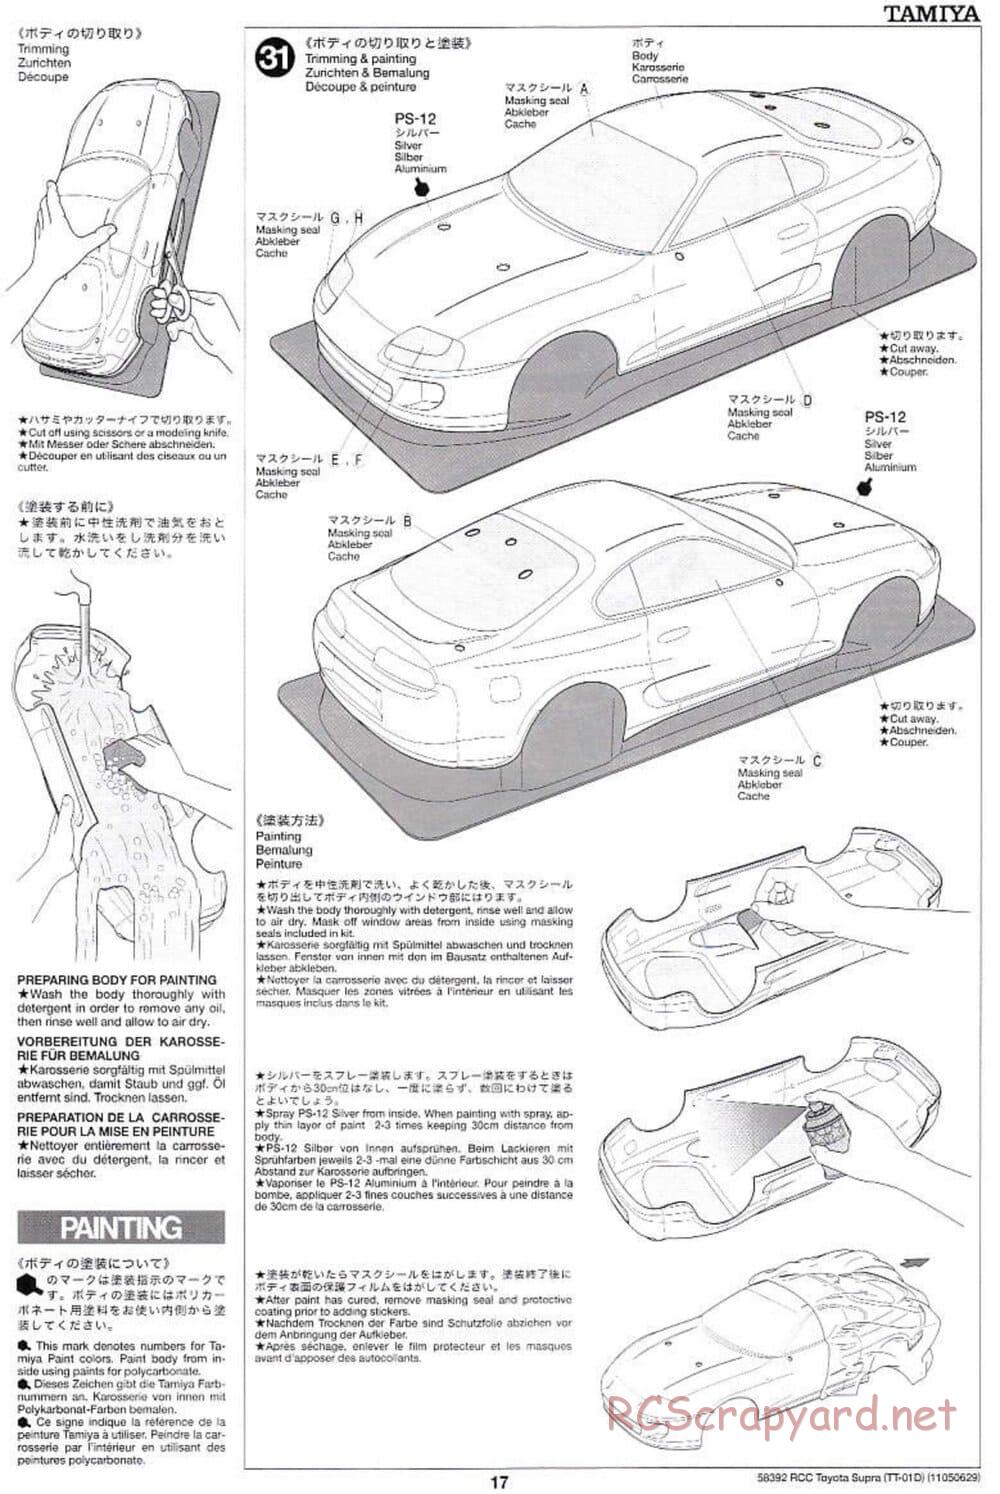 Tamiya - Toyota Supra - Drift Spec - TT-01D Chassis - Manual - Page 17